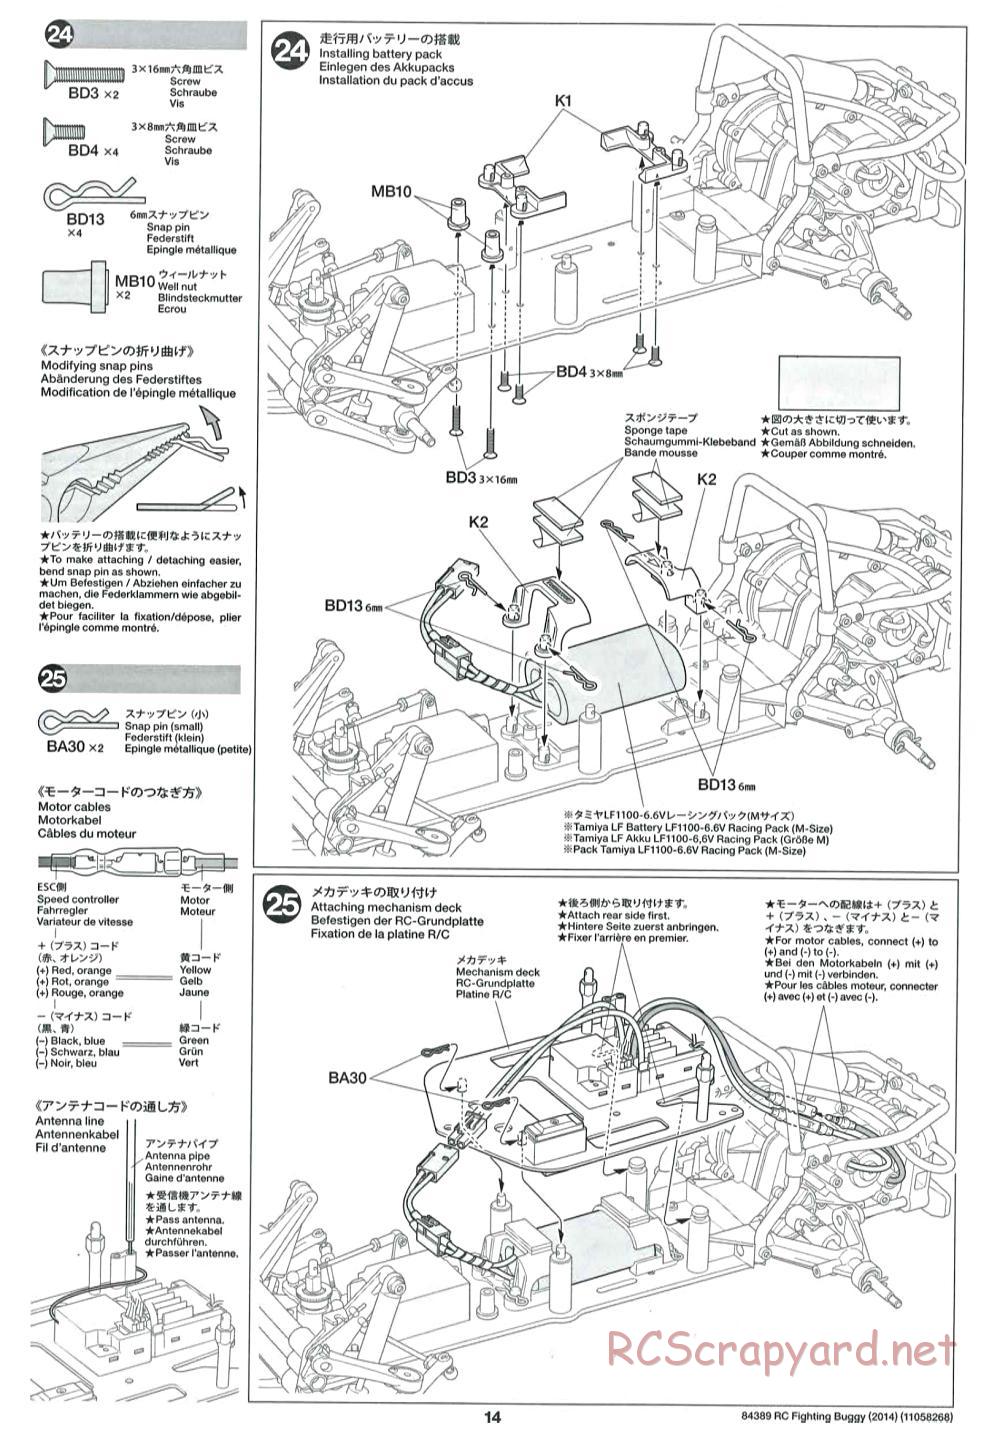 Tamiya - Fighting Buggy (2014) Chassis - Manual - Page 14